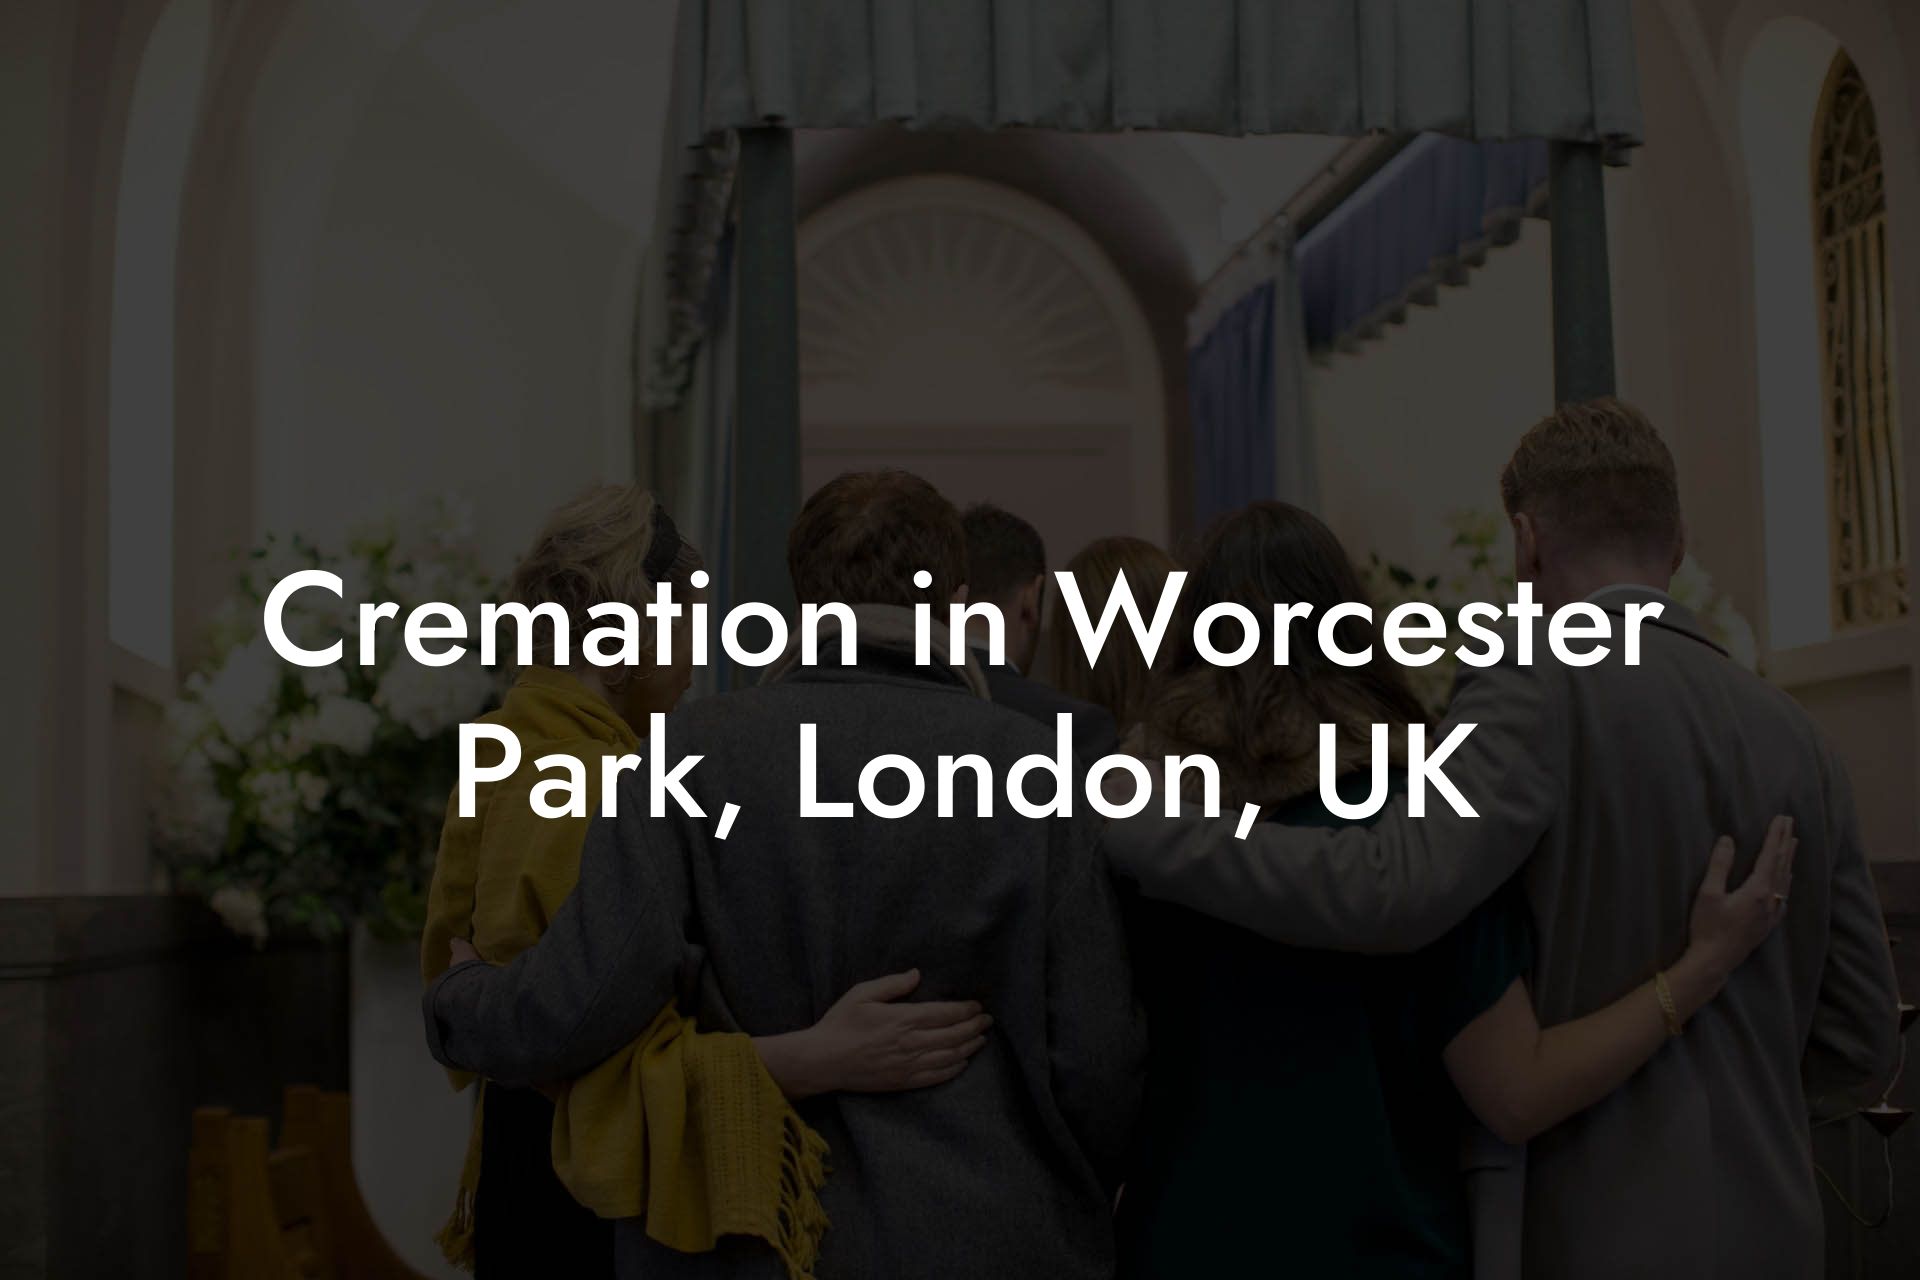 Cremation in Worcester Park, London, UK